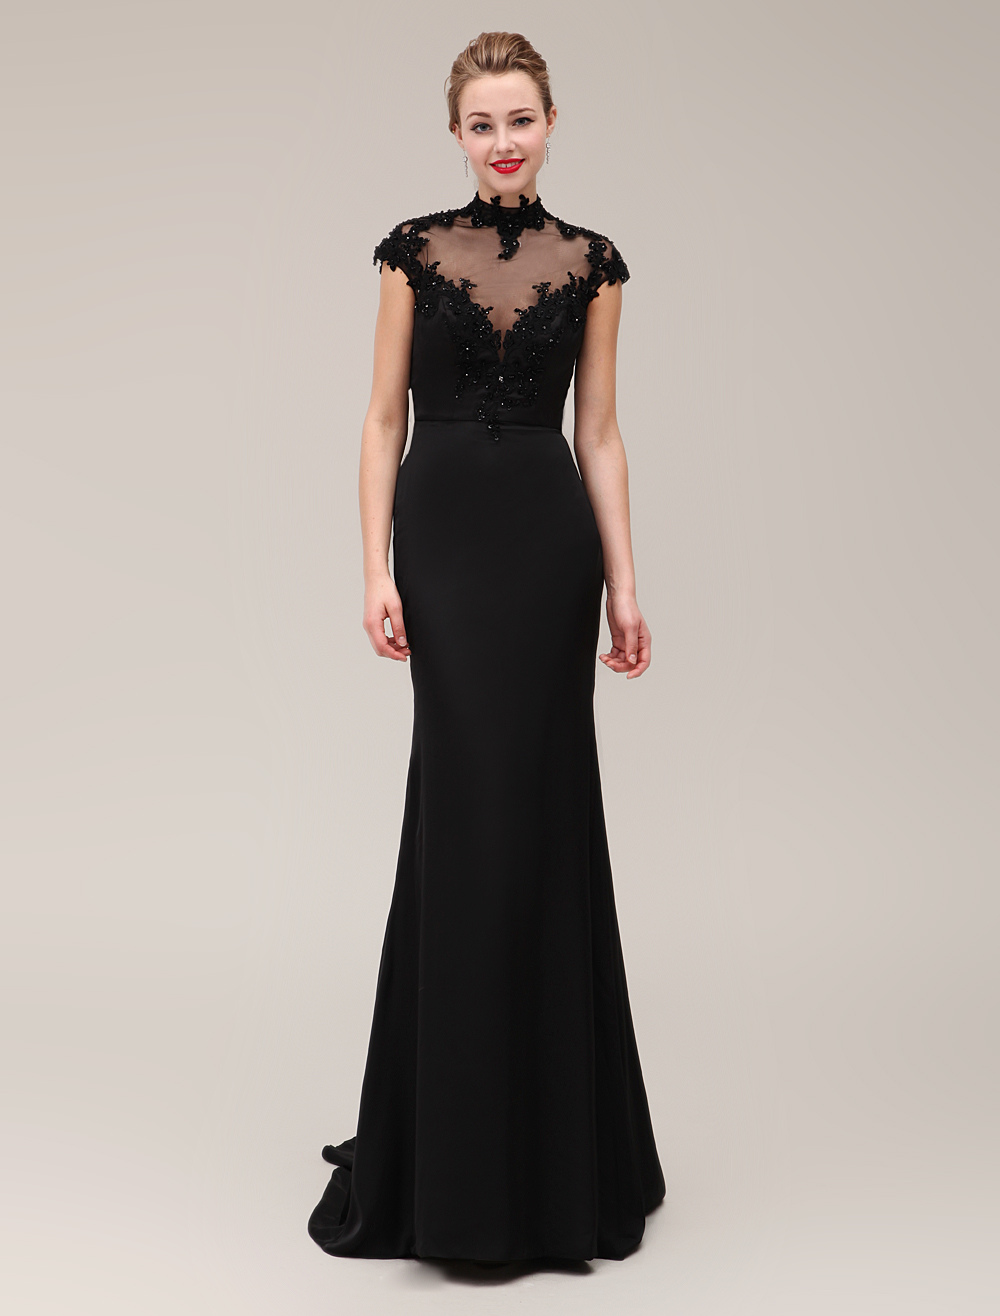 Black Lace Applique Mermaid Evening Dress Wedding Guest Dress Milanoo (Evening Dresses) photo